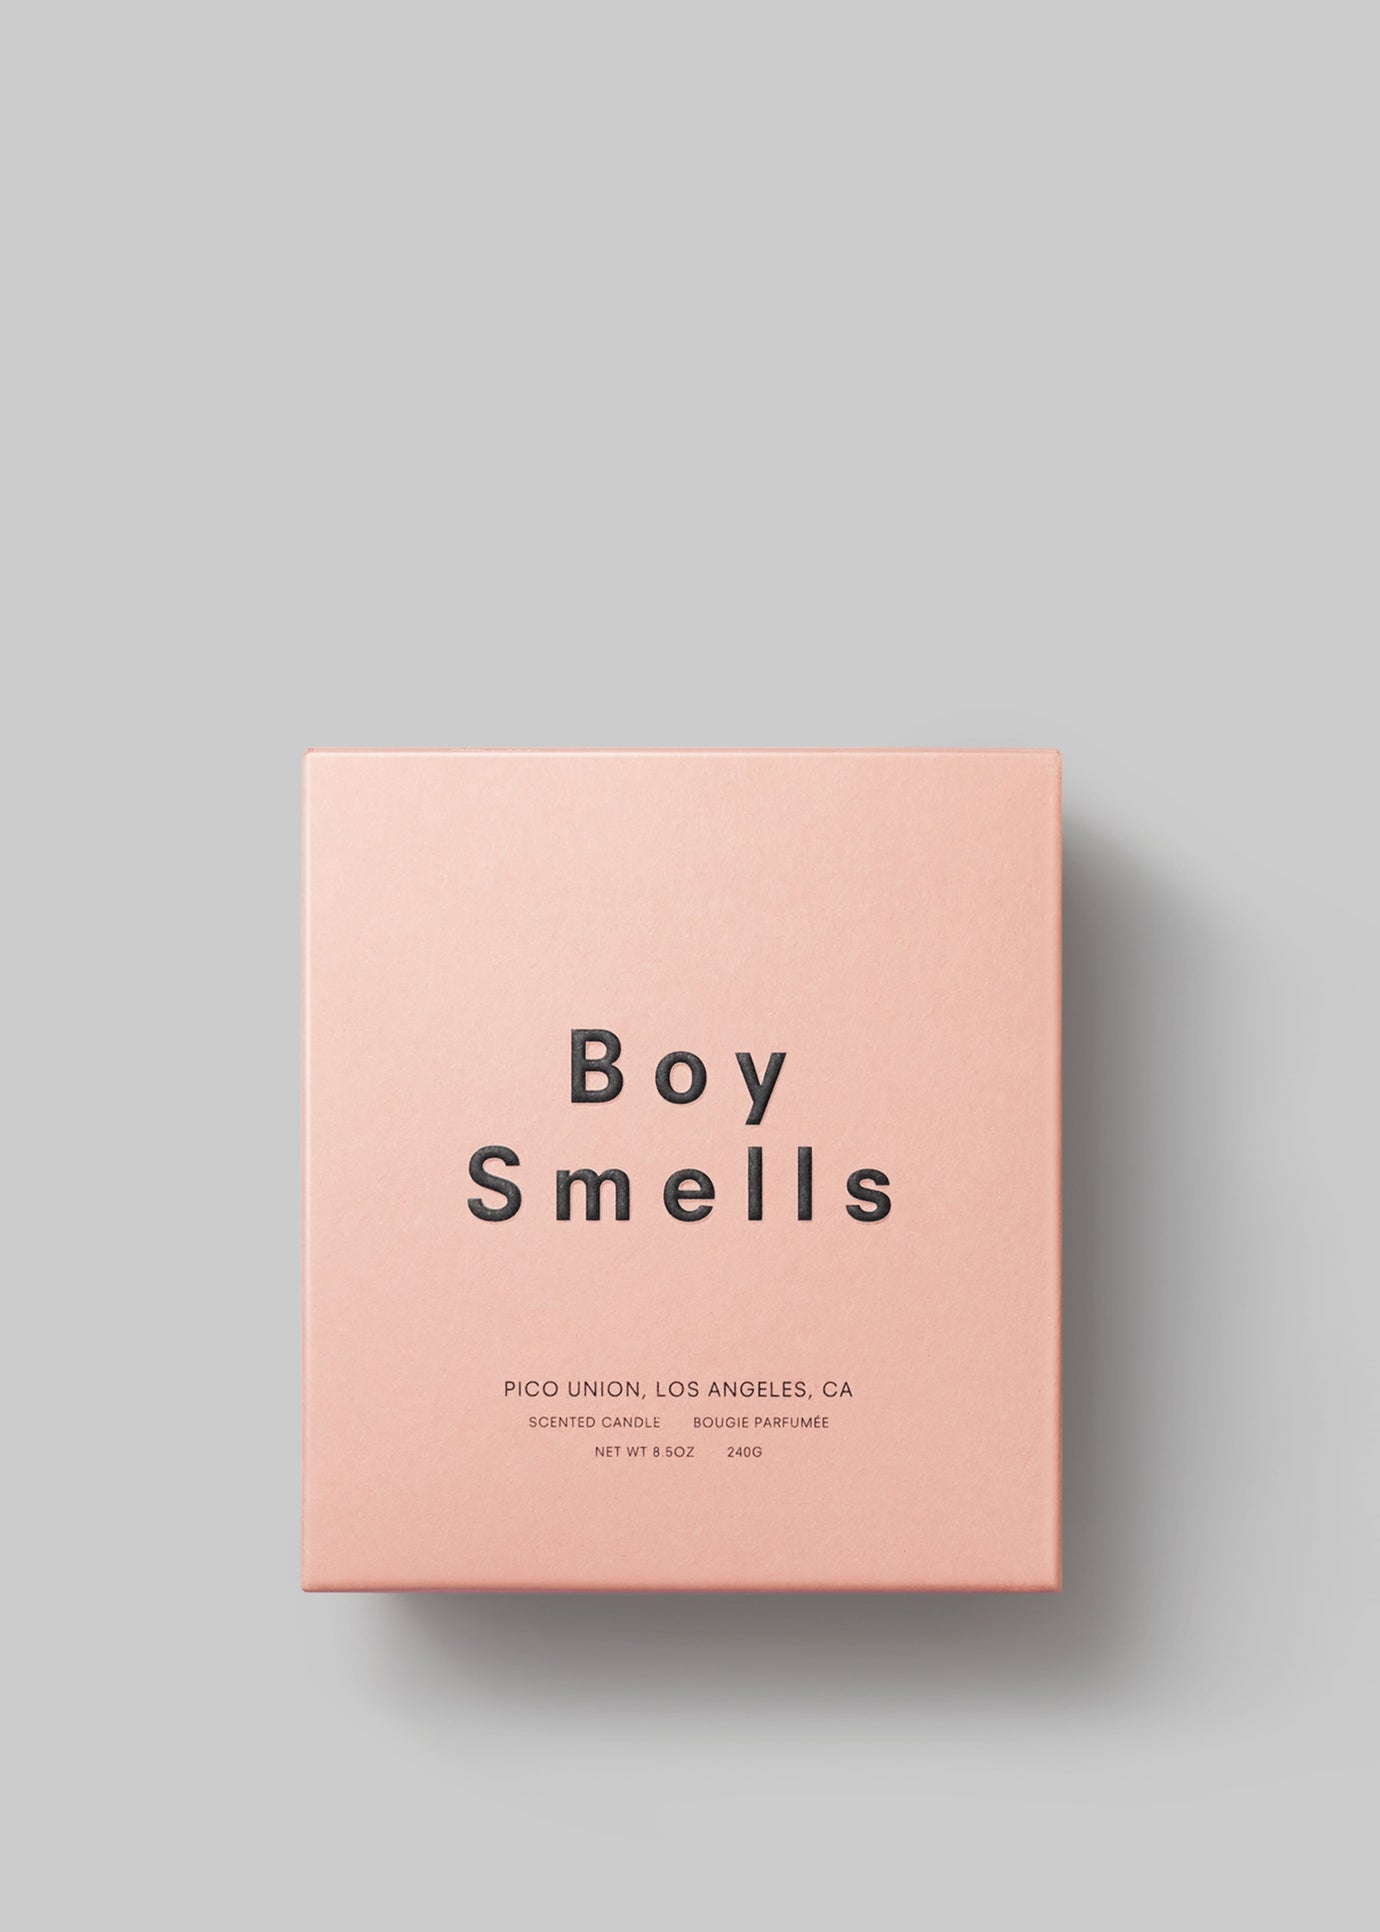 Boy Smells Ash Candle - 1